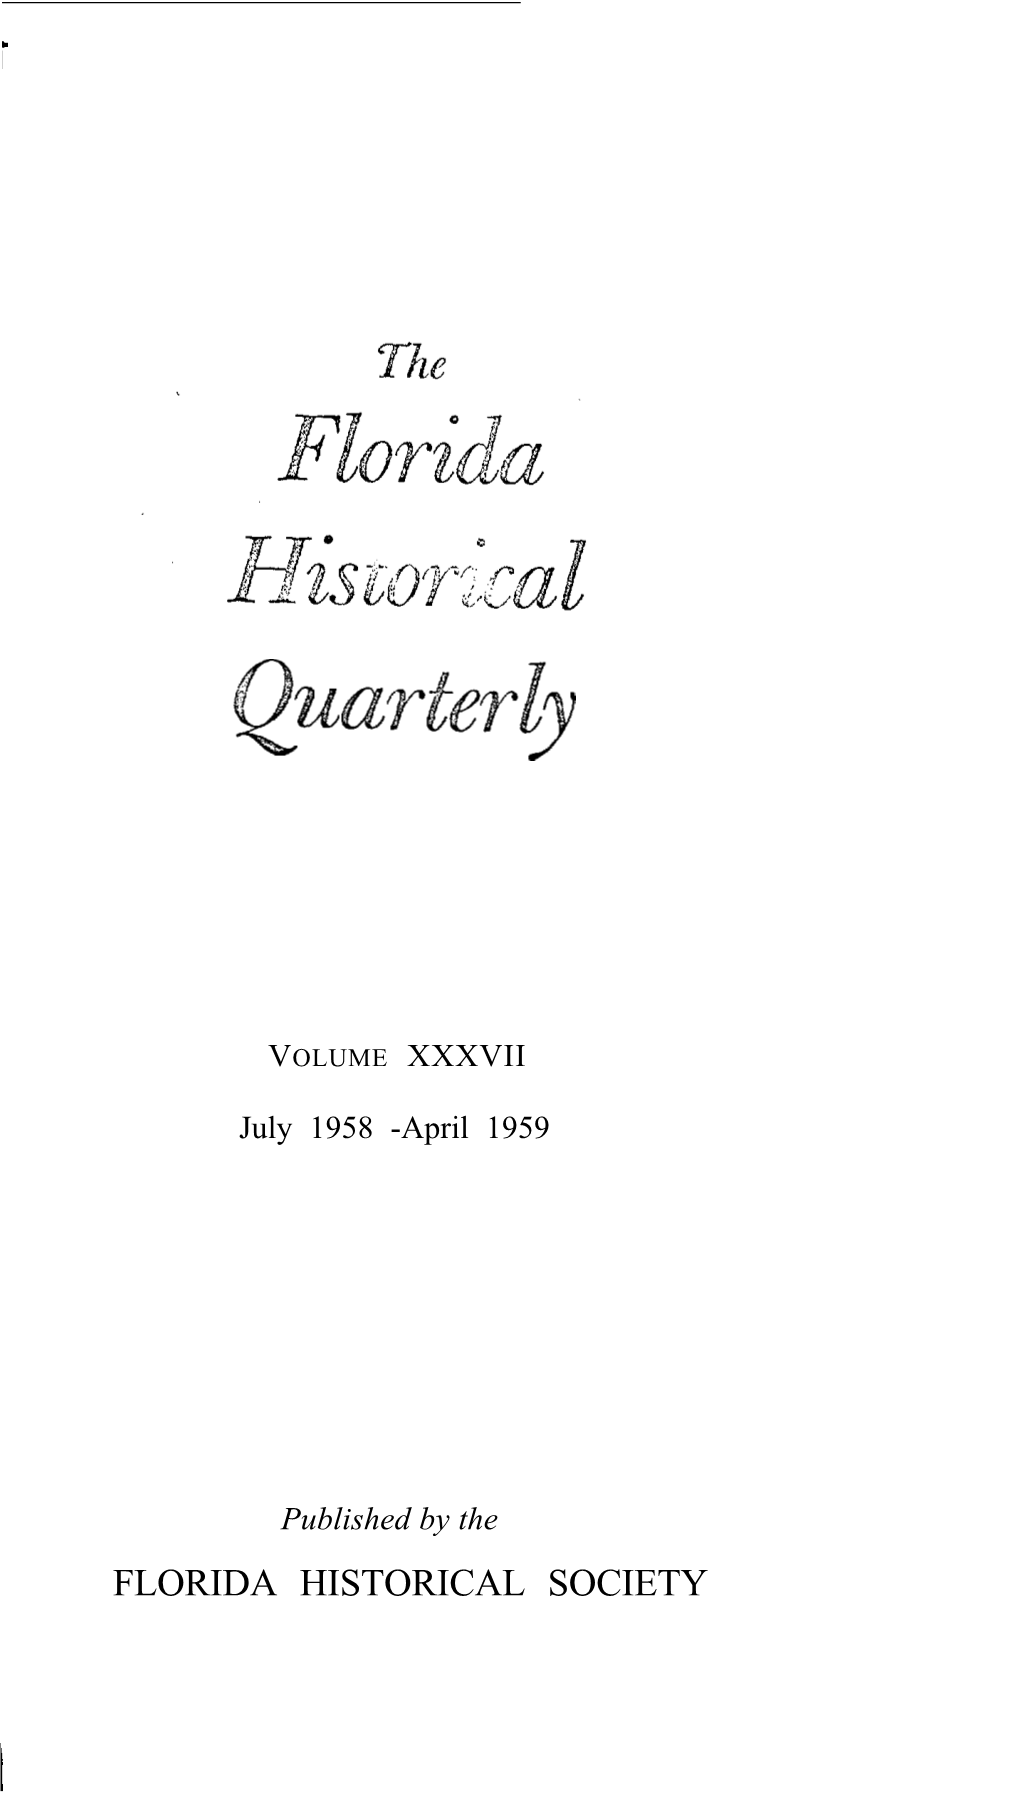 Florida Historical Society